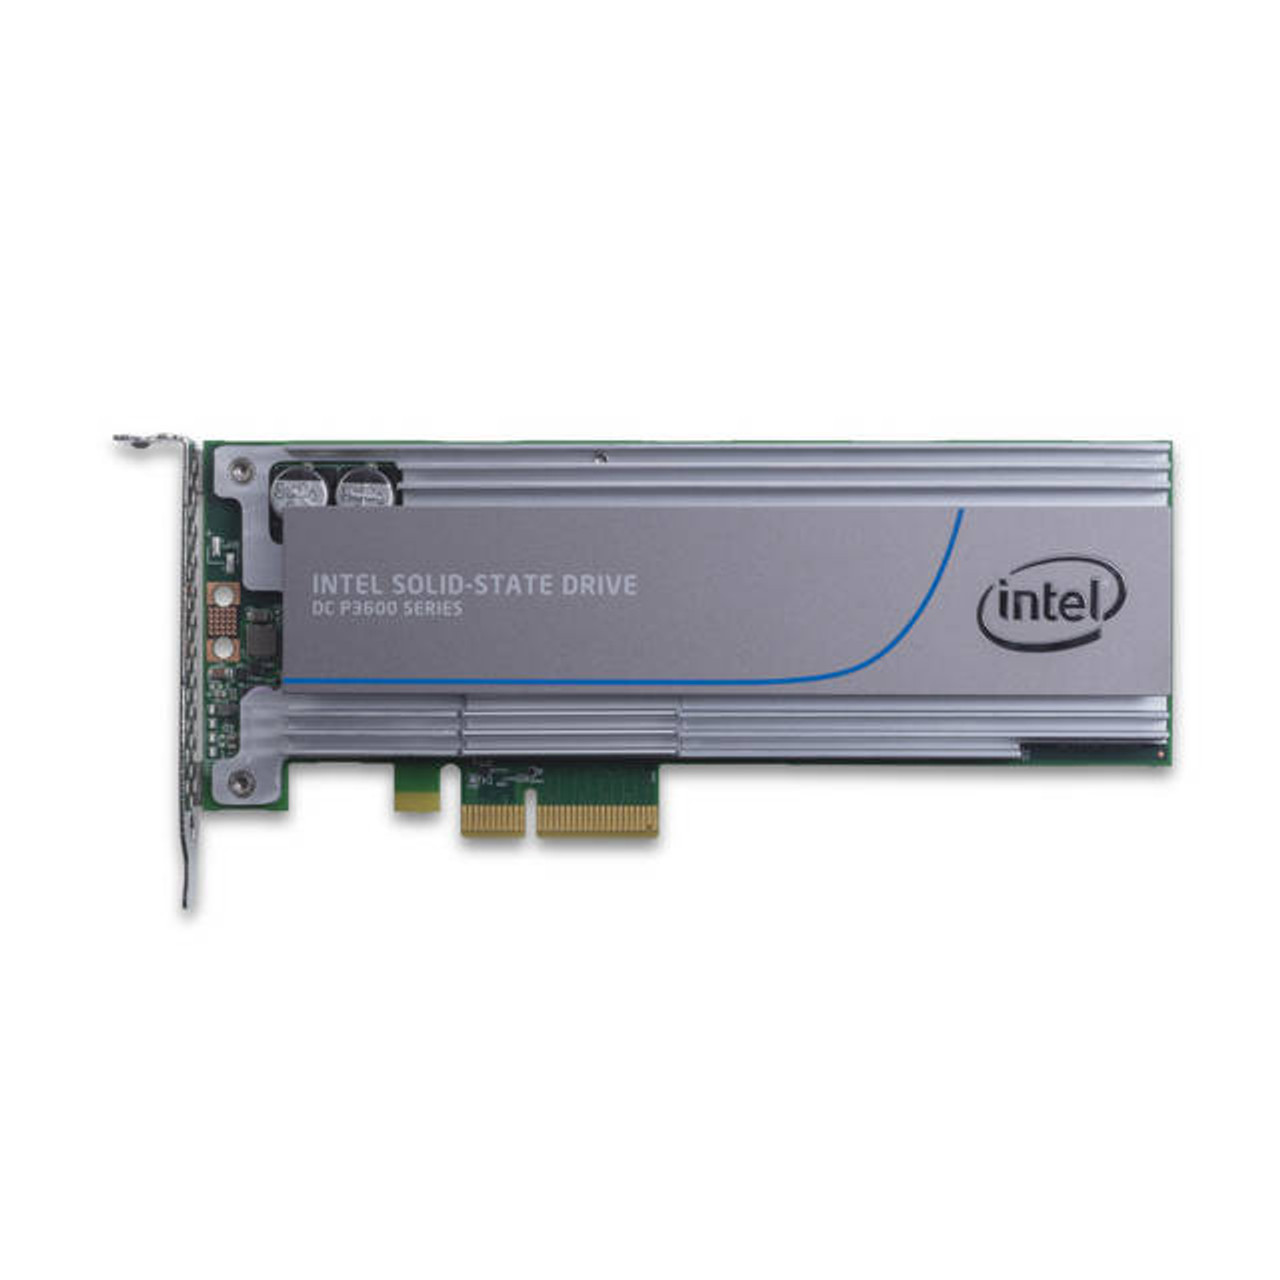 Intel DC P3600 Series SSDPEDME800G401 800GB HHHL (CEM2.0) PCI-Express 3.0 x4 Solid State Drive (MLC)